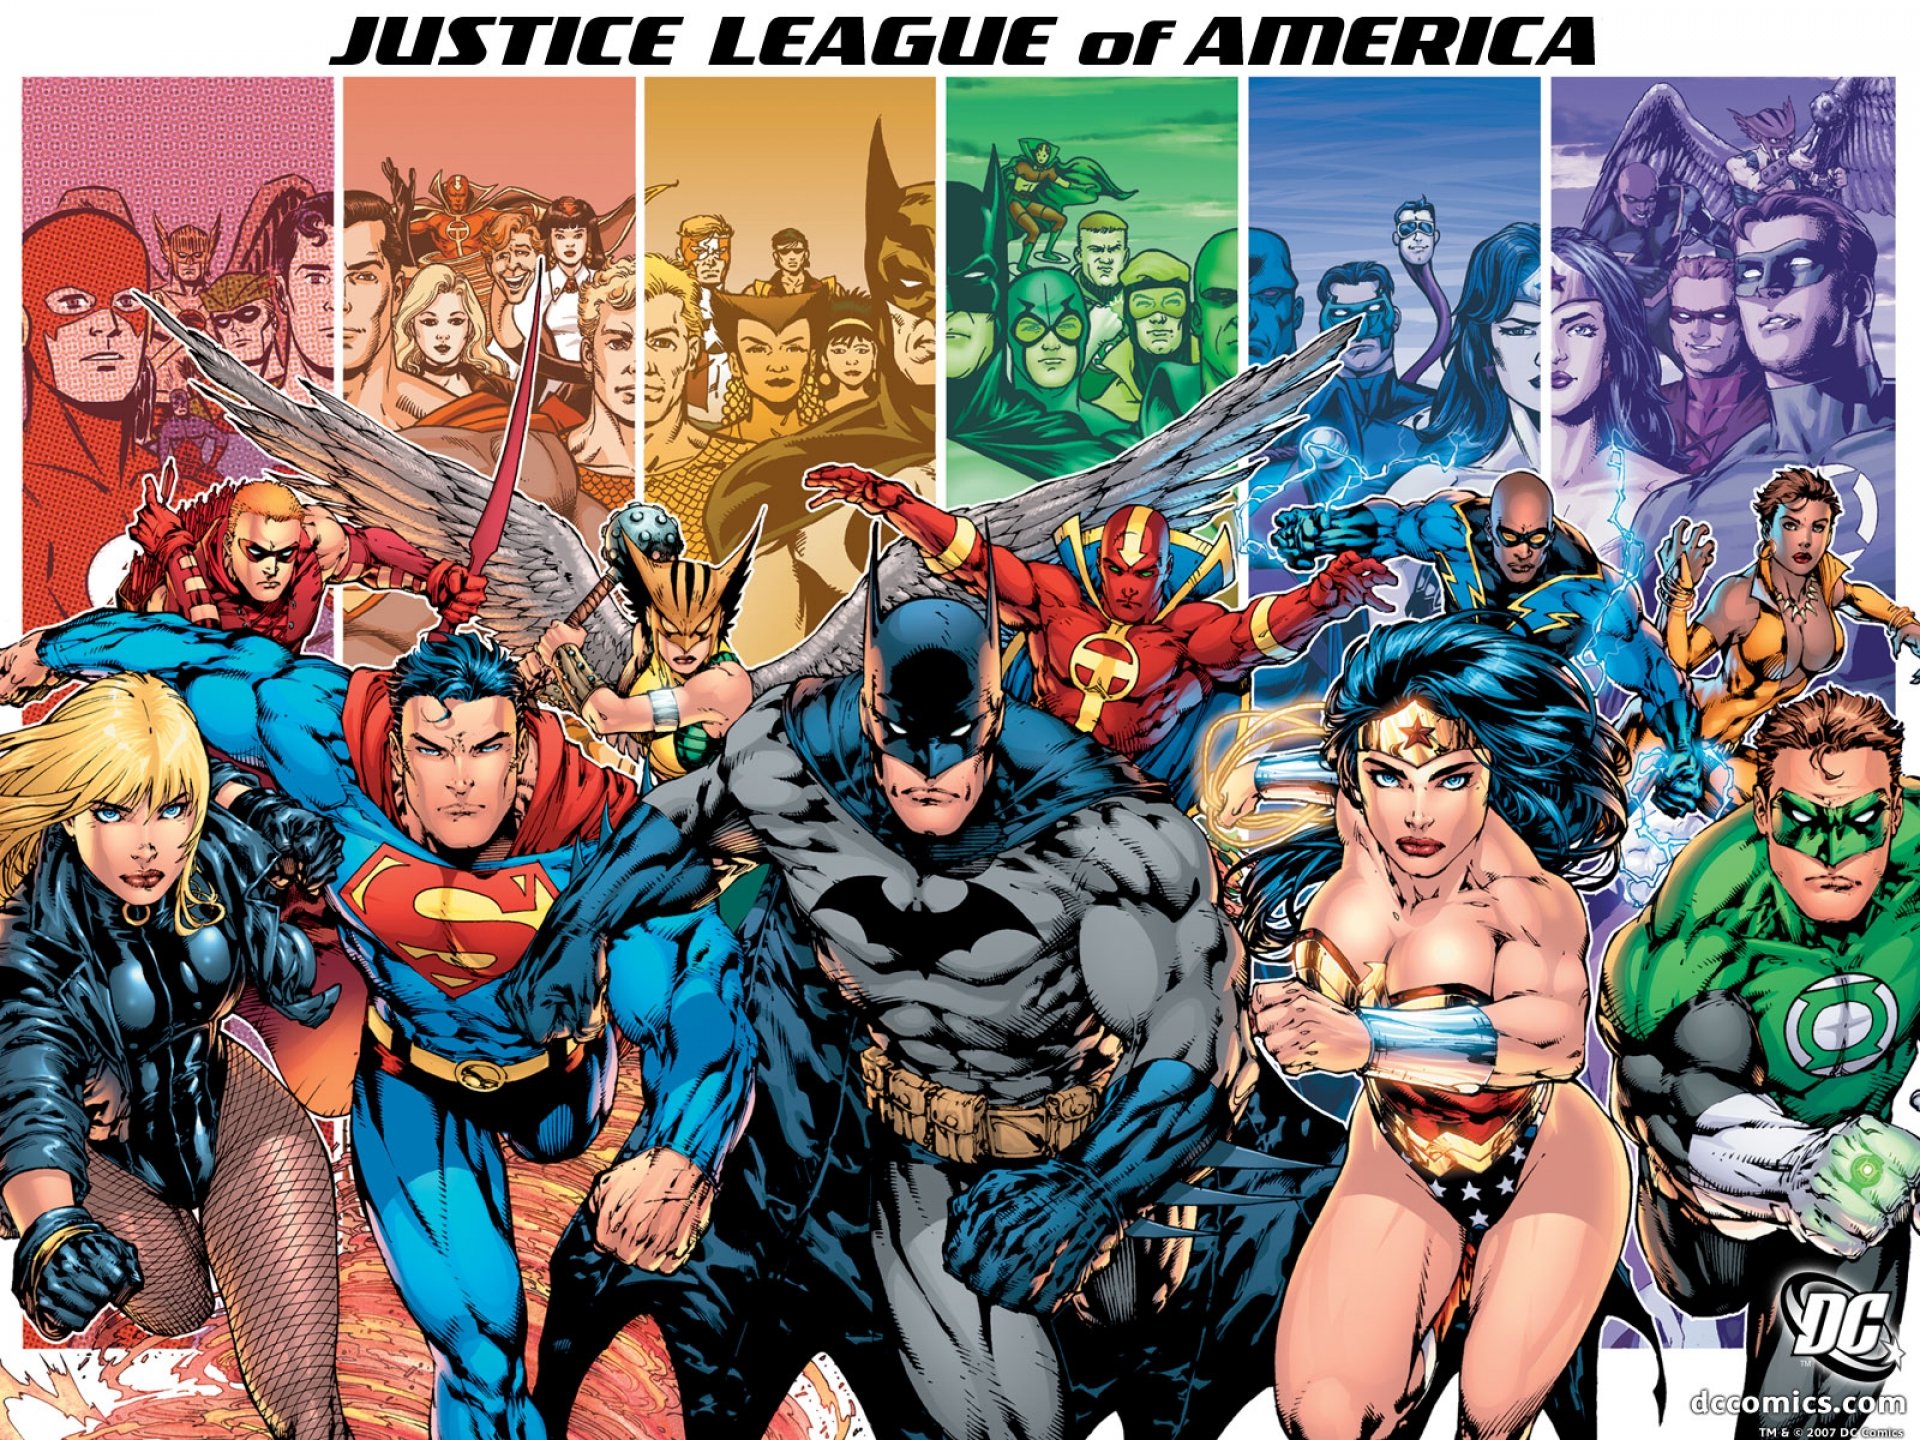 batman, comics, justice league of america, aquaman, black canary, black lightning, blonde, blue beetle (dc comics), booster gold, bracelet, cape, dc comics, elongated man, fishnet, flash, glove, green arrow, green lantern, hawkgirl (dc comics), hawkman (dc comics), helmet, jacket, justice league, kendra sanders, kyle rayner, martian manhunter, mask, mister miracle, plastic man, red arrow, red tornado, roy harper, superman, ted kord, vixen (dc comics), wonder woman